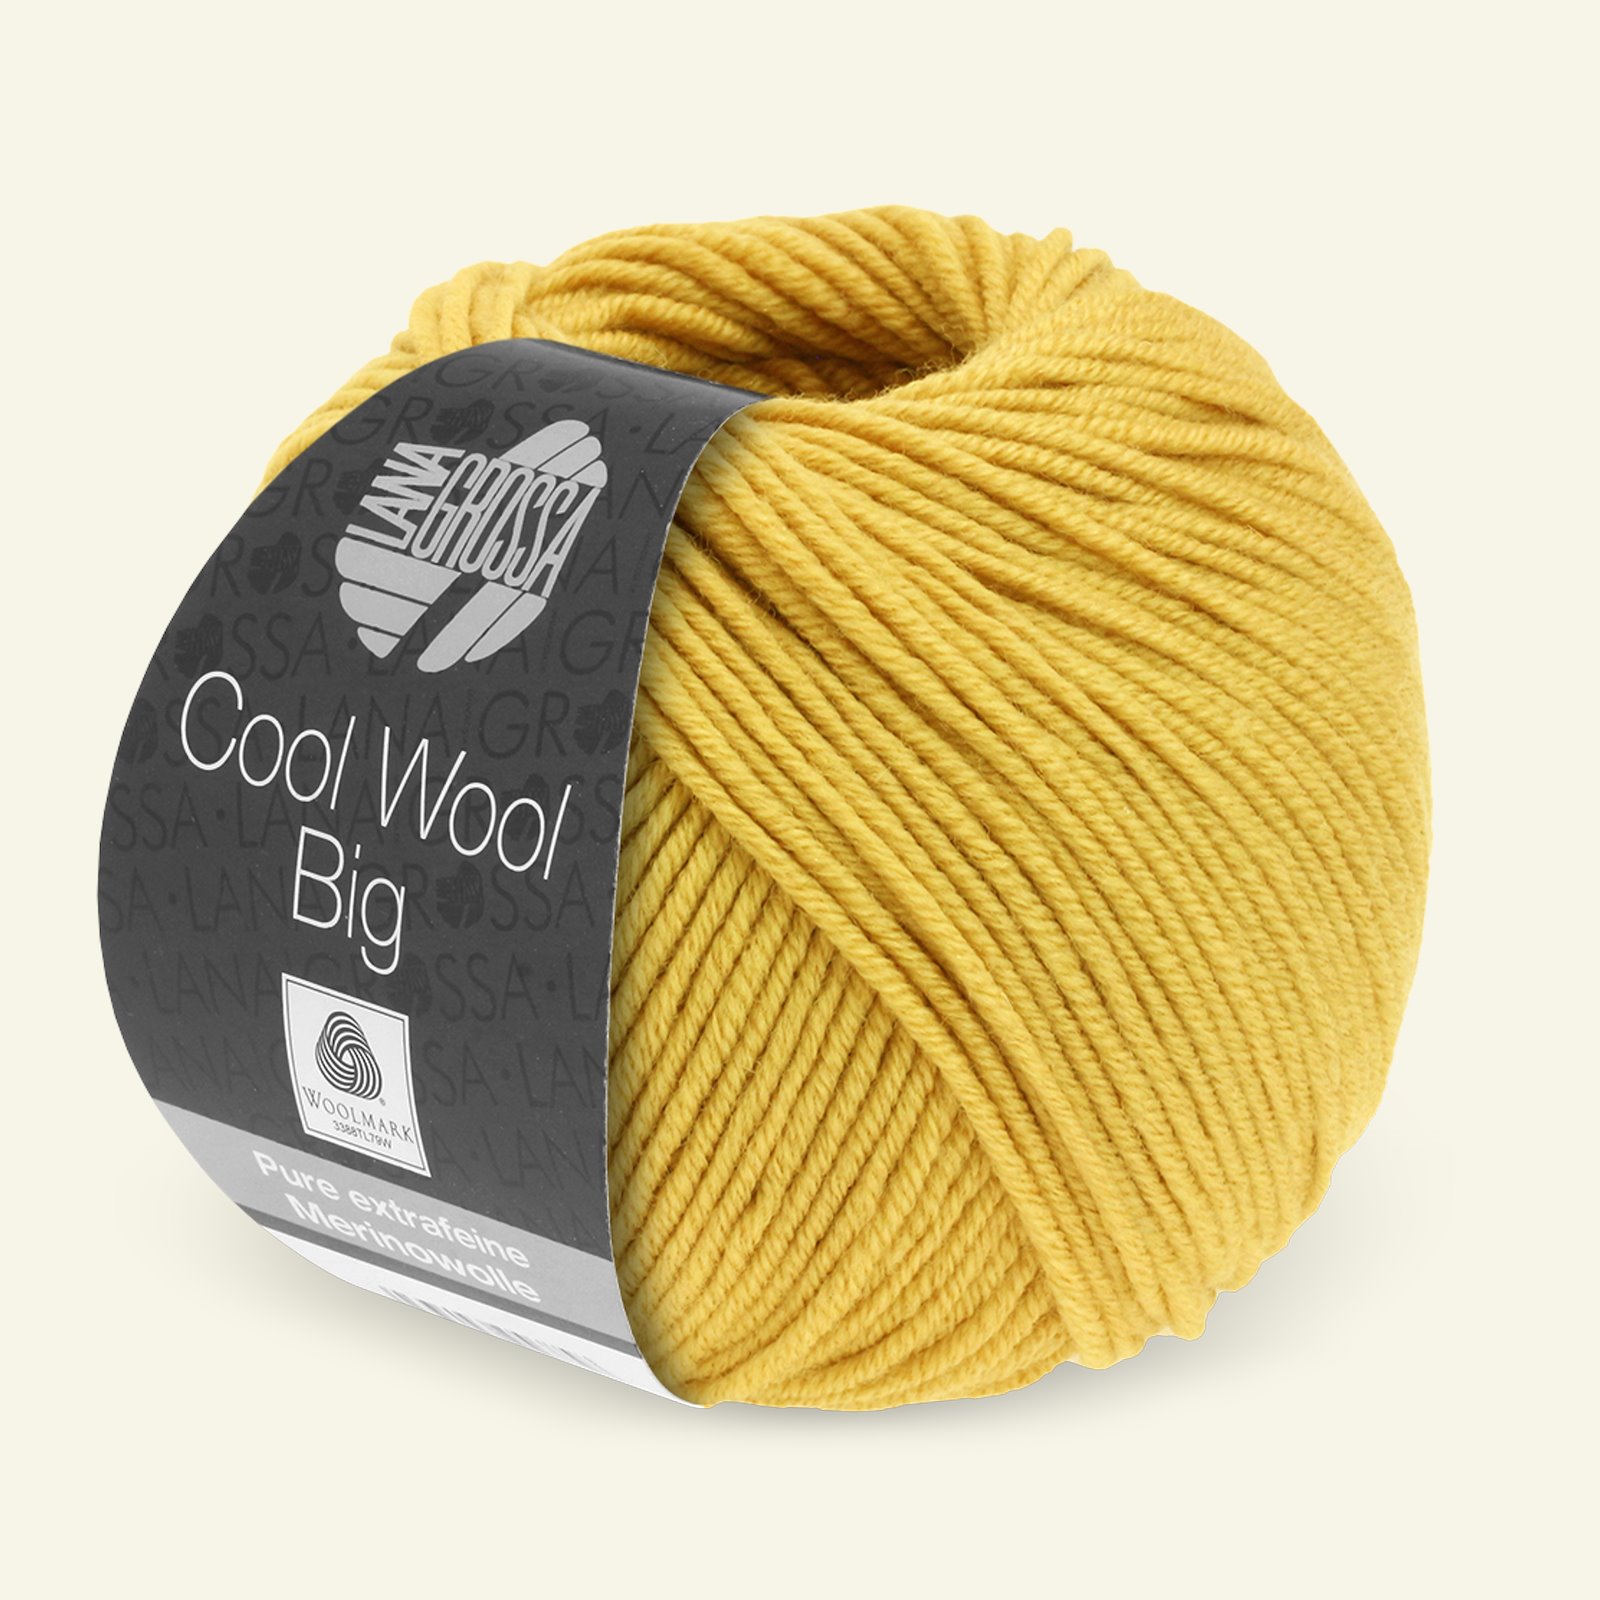 Lana Grossa, extrafine merino wool yarn "Cool Wool Big", saffron yellow 90001099_pack